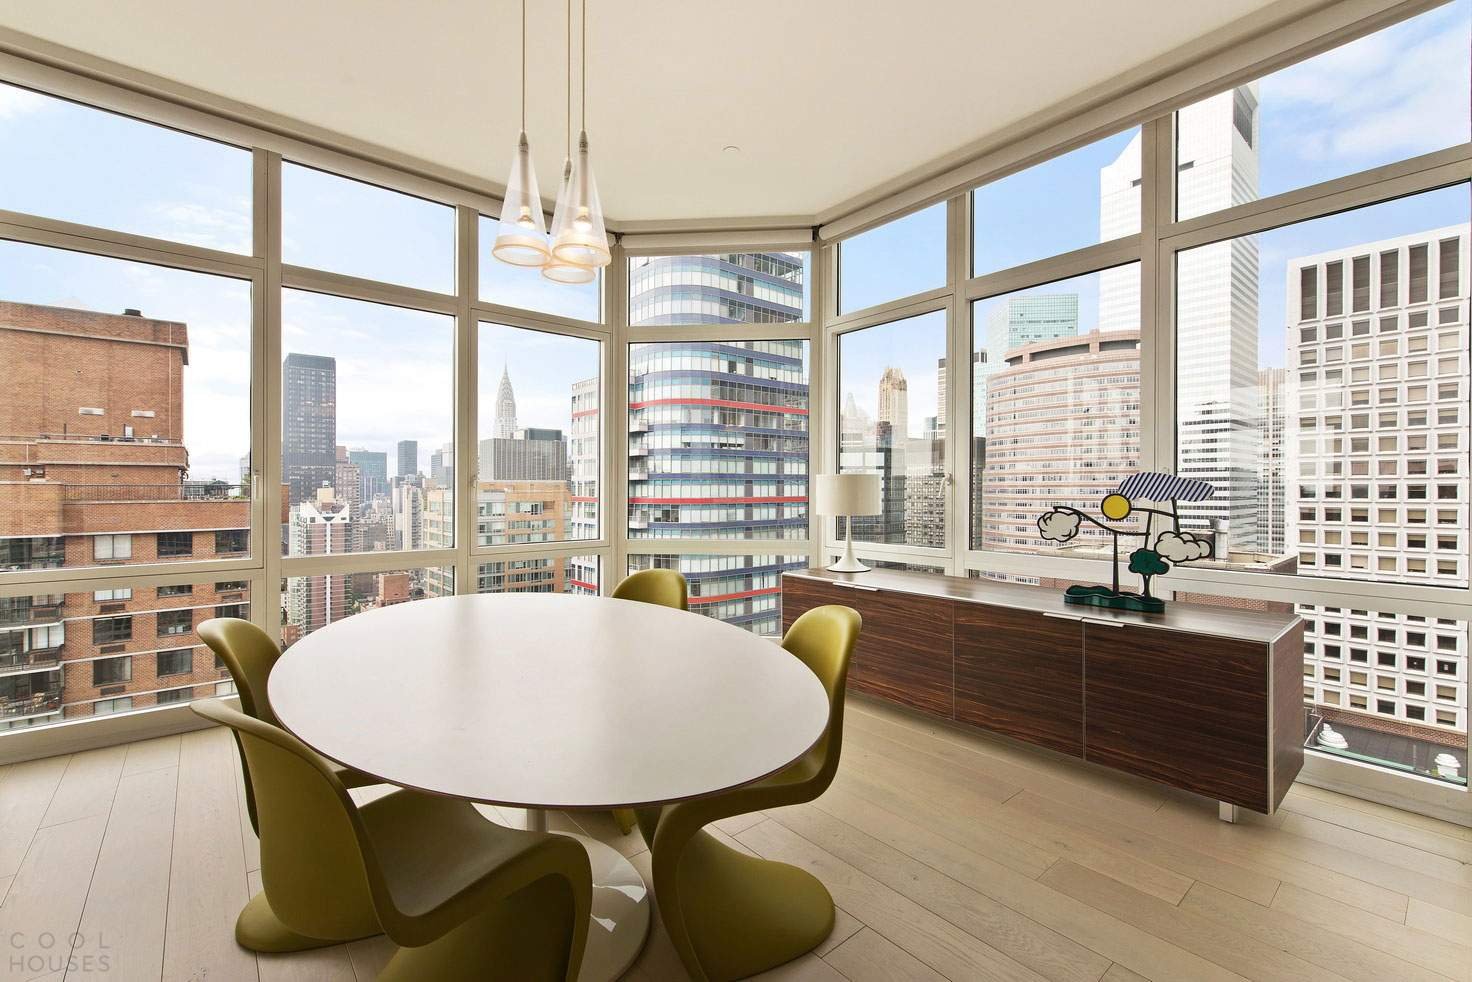 Neat street apartment. Нью-Йорк Манхэттен квартиры с панорамными окнами. Пентхаус Манхэттен 2020. Панорамные окна Нью Йорк. Пентхаус в Нью Йорке на Манхэттене.